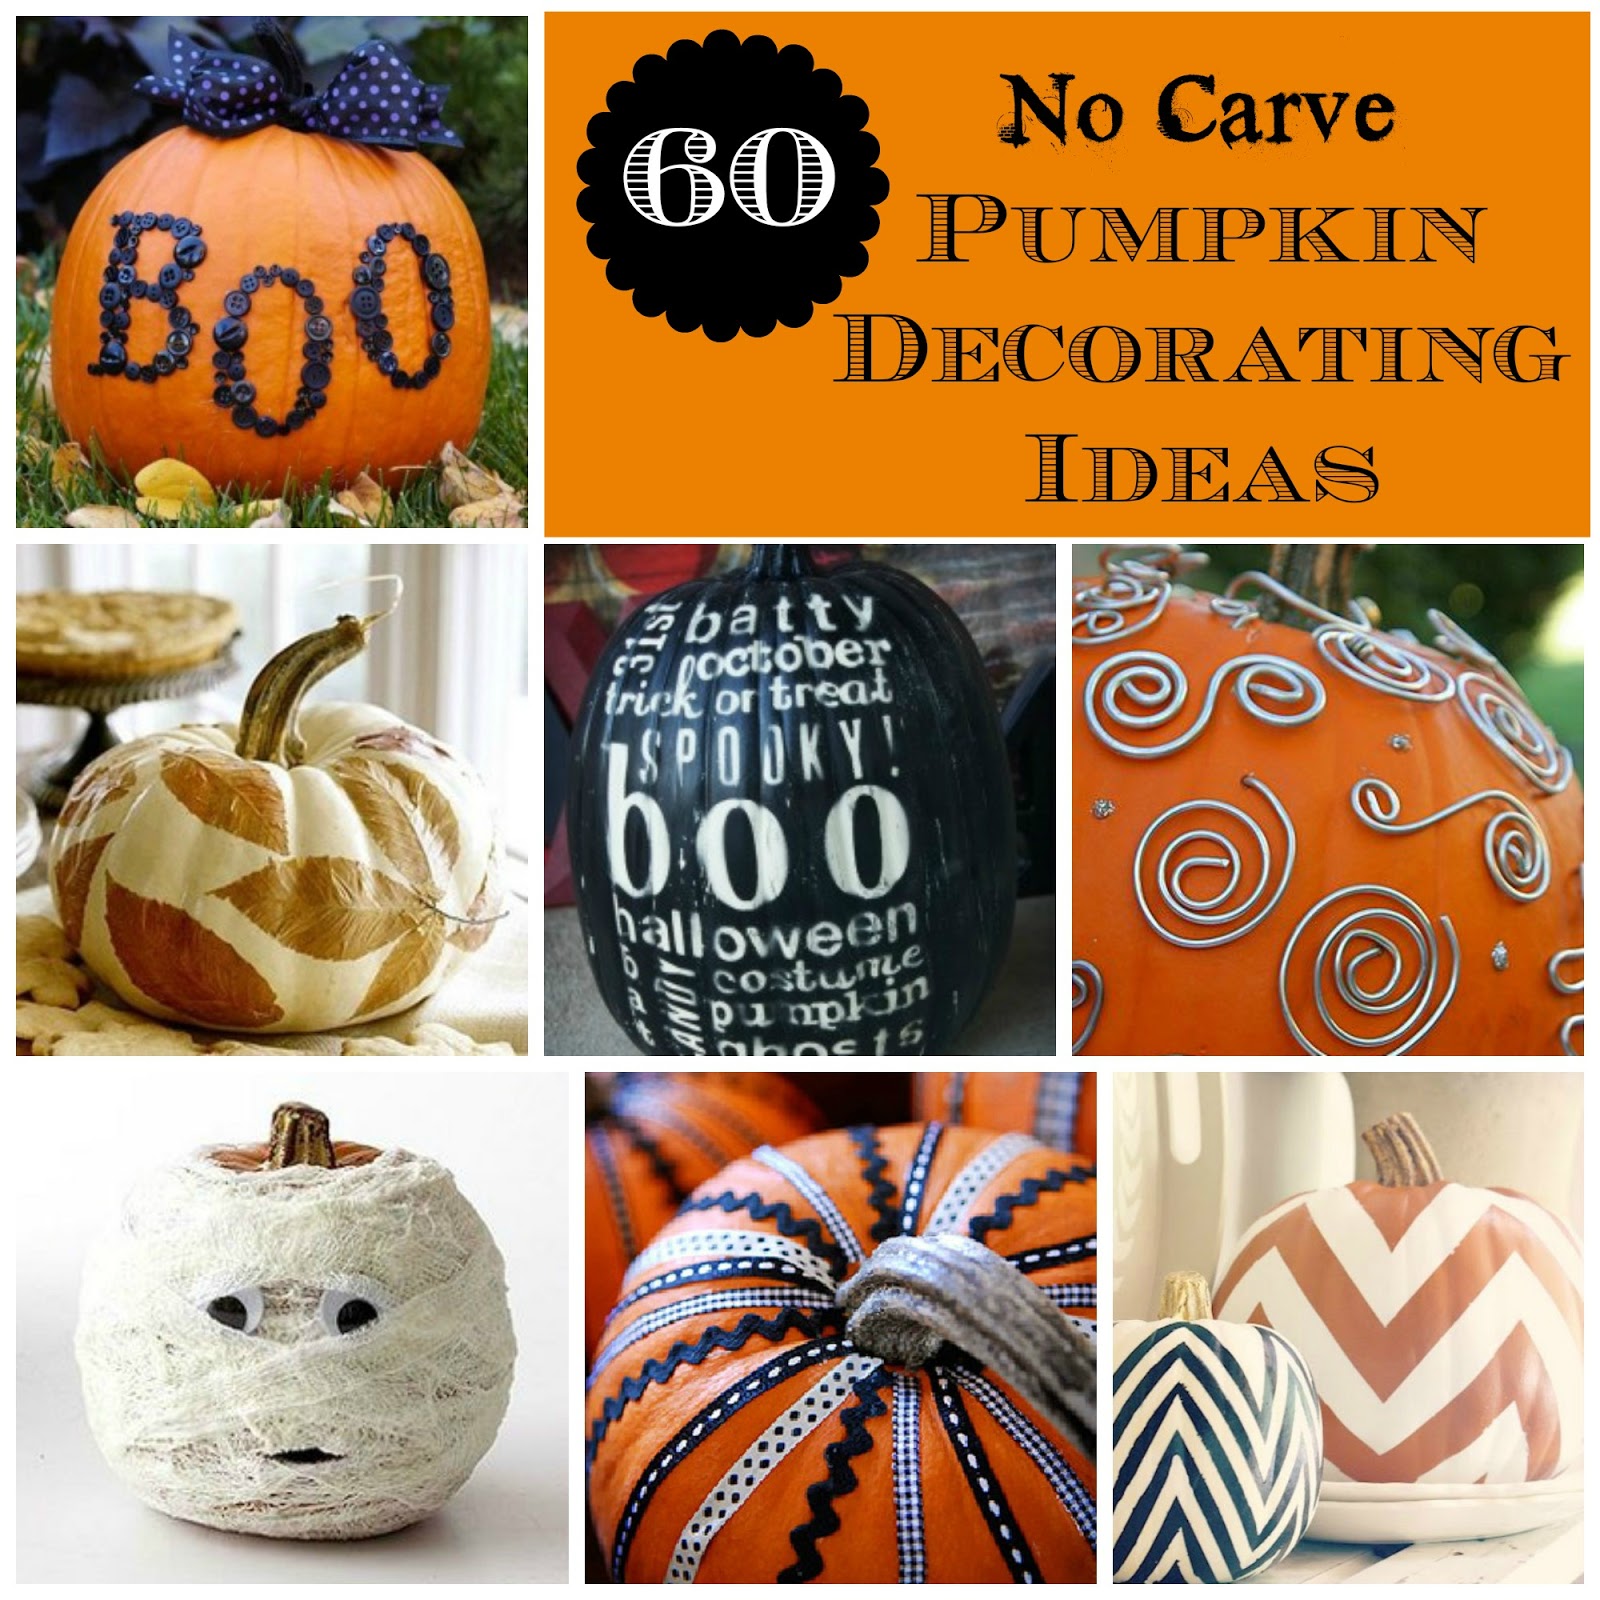 60 No Carve Pumpkin Decorating Ideas ~ All Mississippi ...